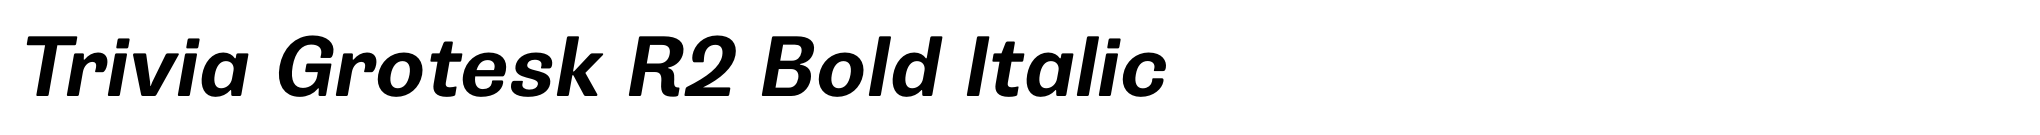 Trivia Grotesk R2 Bold Italic image